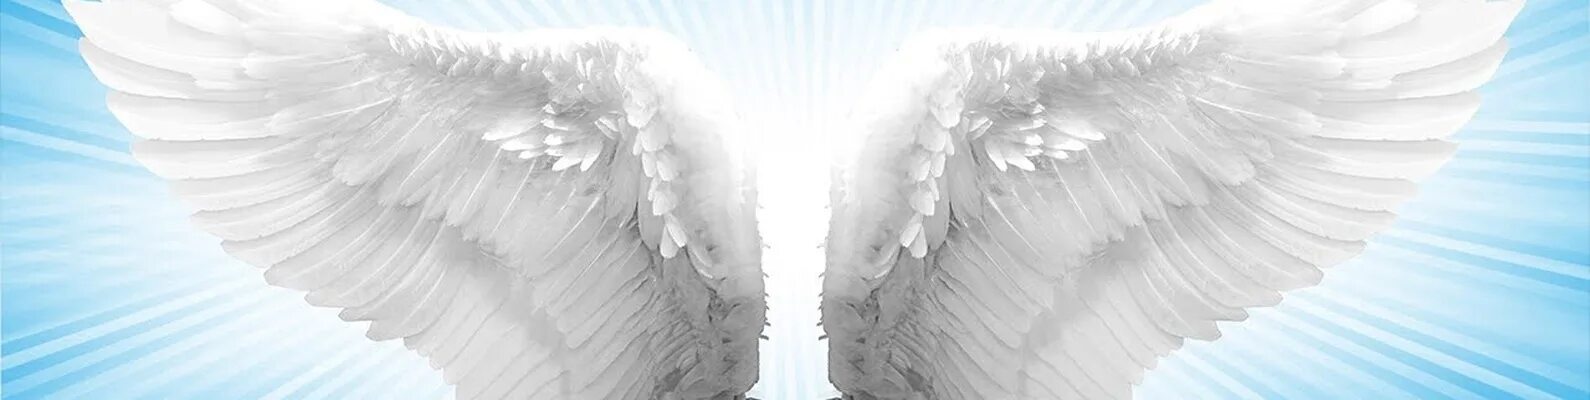 Сюжет два крыла. Крылья ангела в небе. Крылья ангела в небесах. Белые Крылья на фоне неба. Белые Крылья в небе.